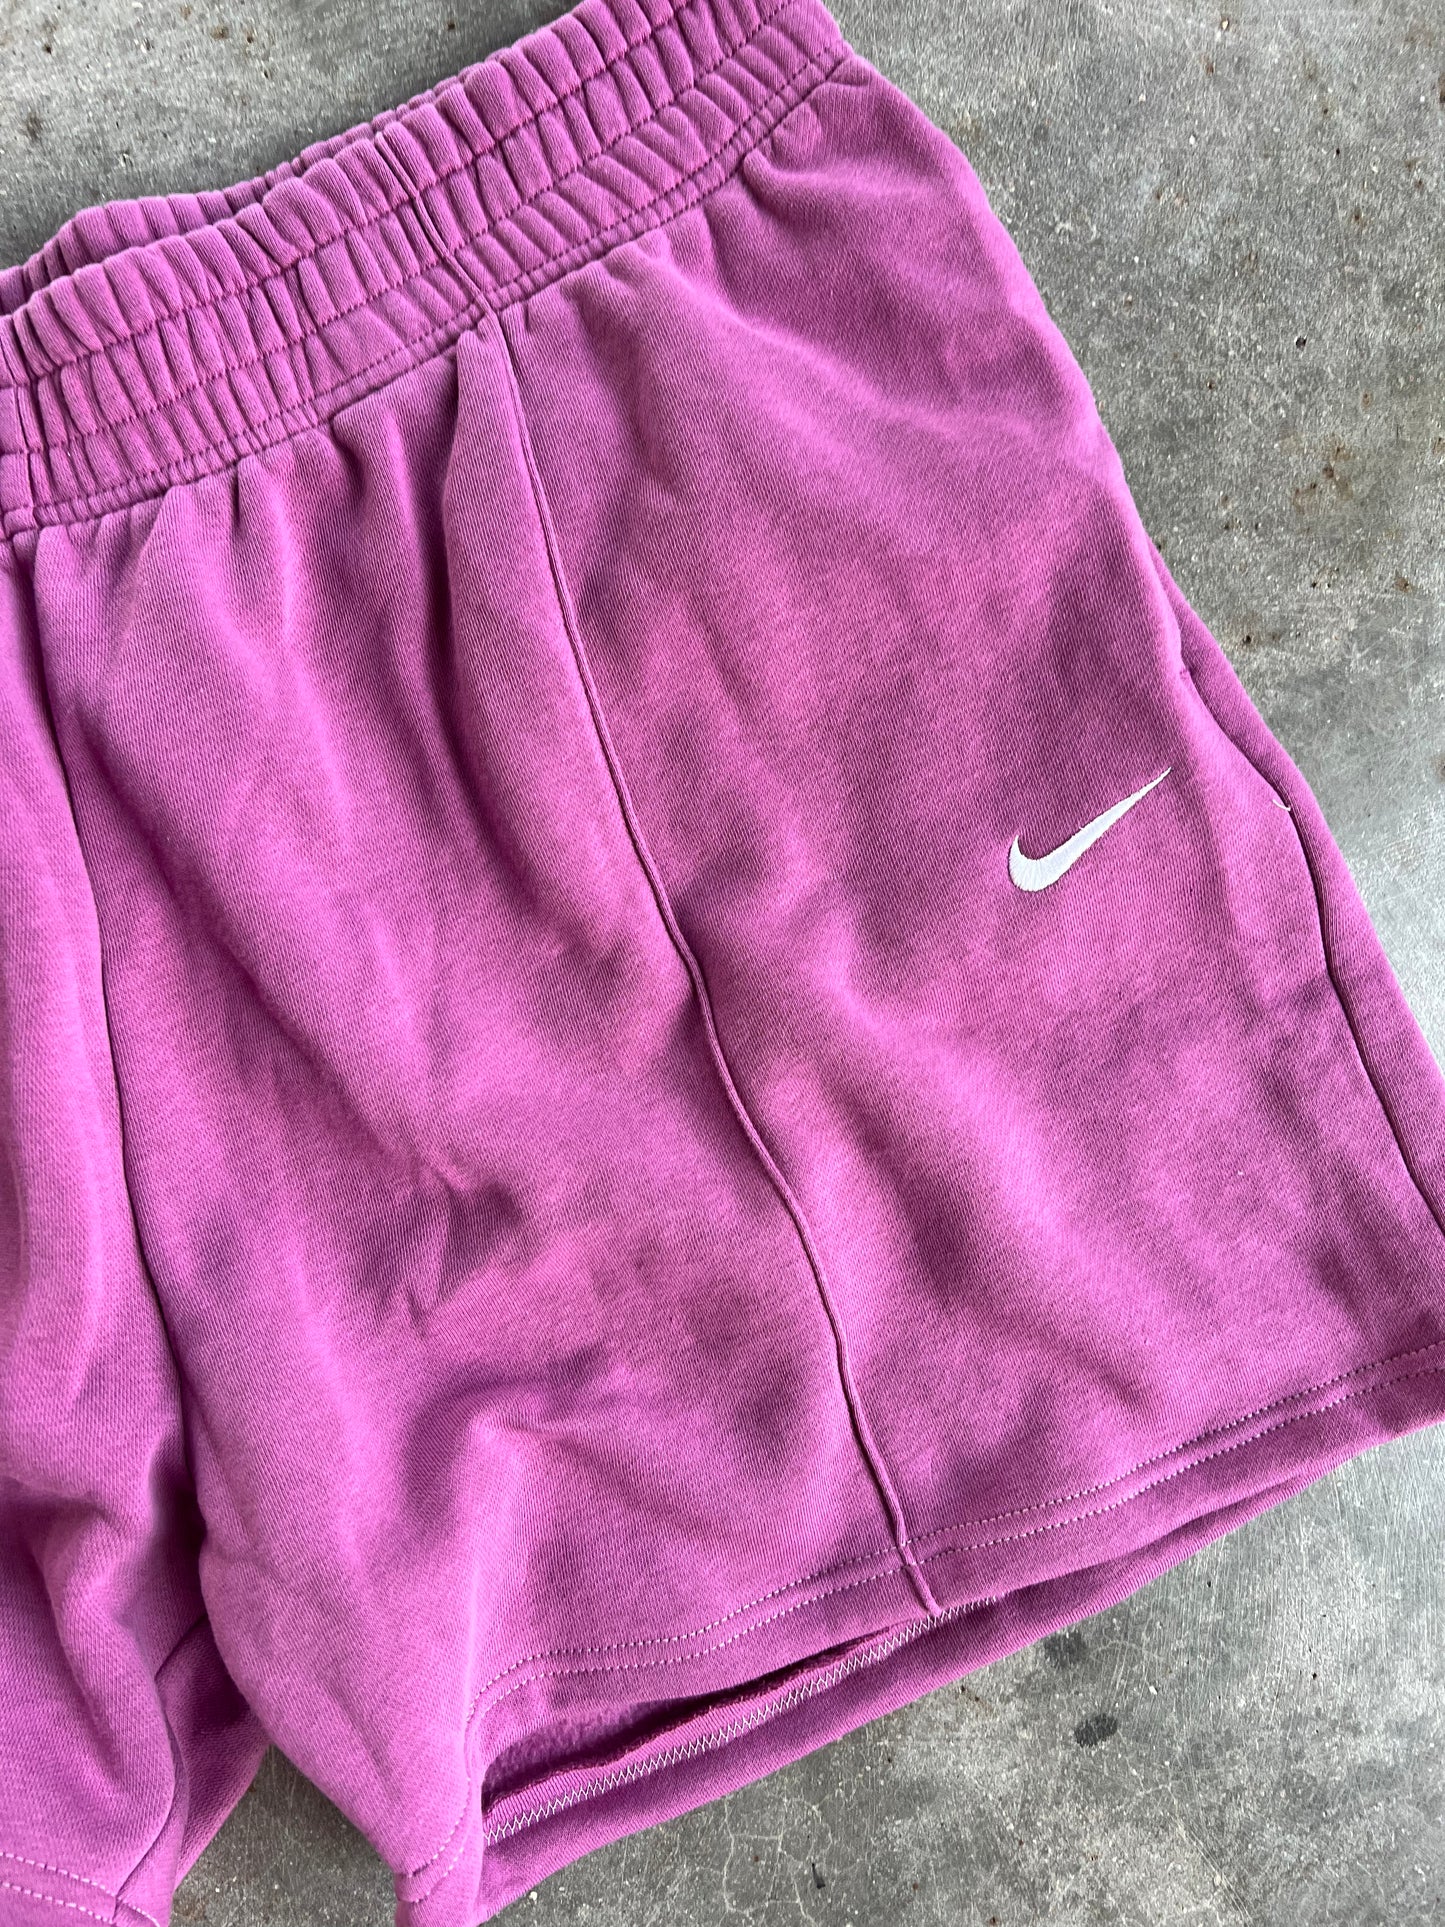 Reworked Nike Shorts -  XXL